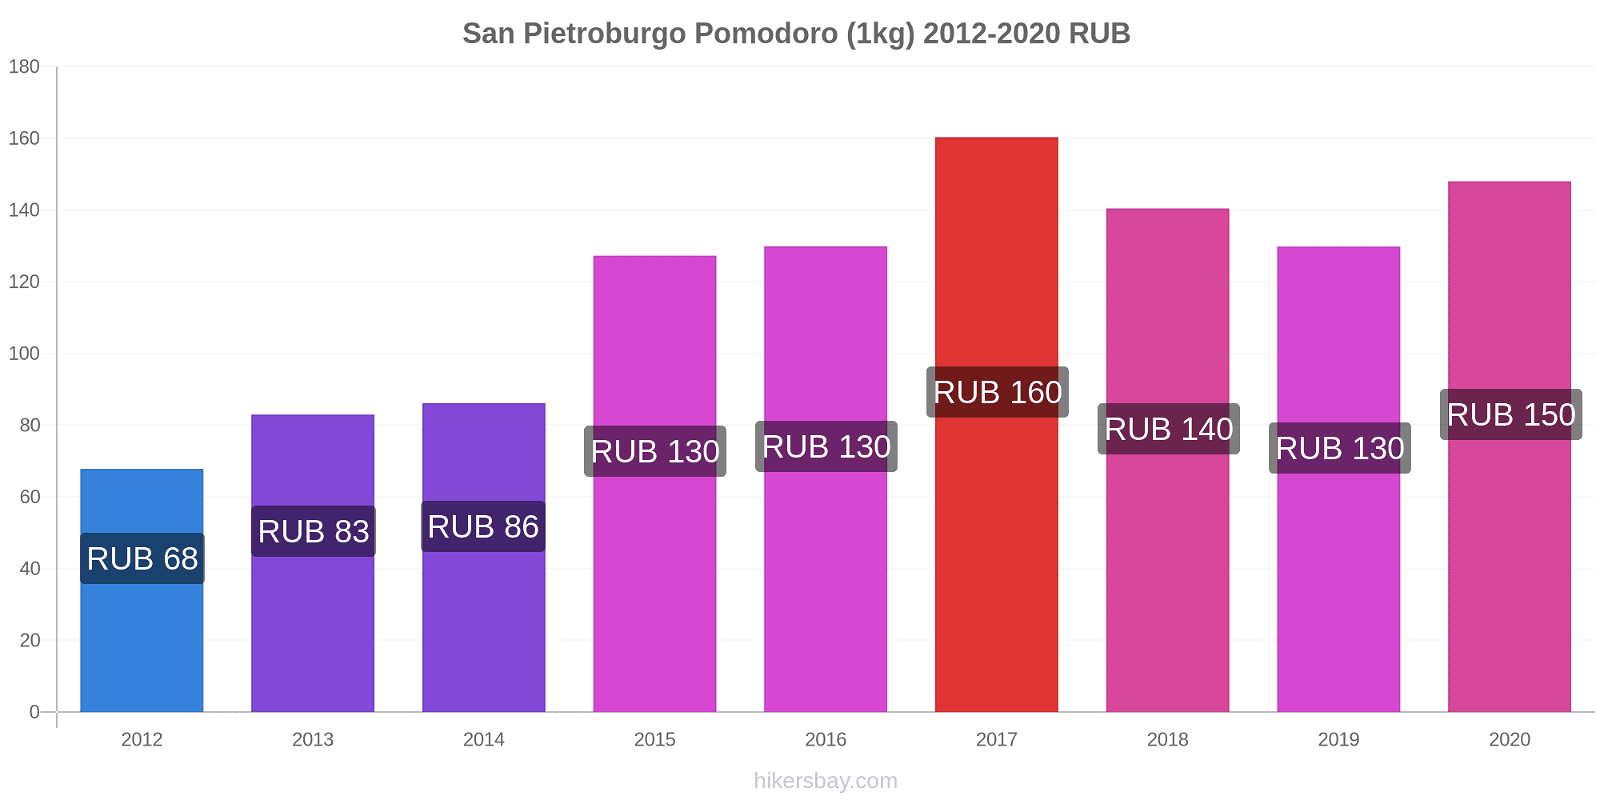 San Pietroburgo variazioni di prezzo Pomodoro (1kg) hikersbay.com